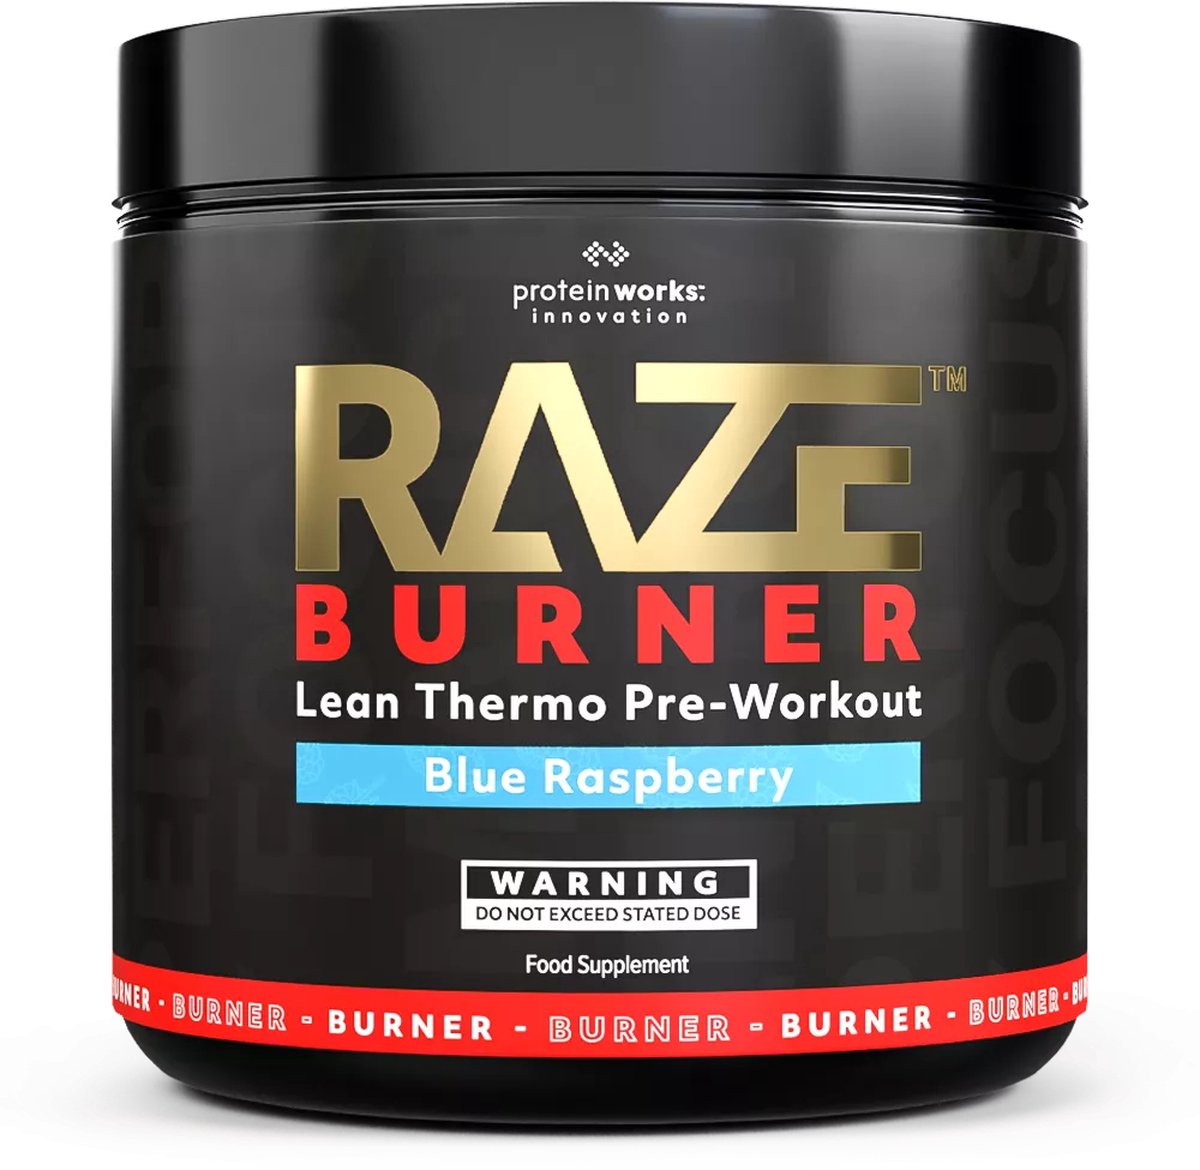 The Protein Works - Raze Burner - Pre-workout - Sour Cherry & Apple